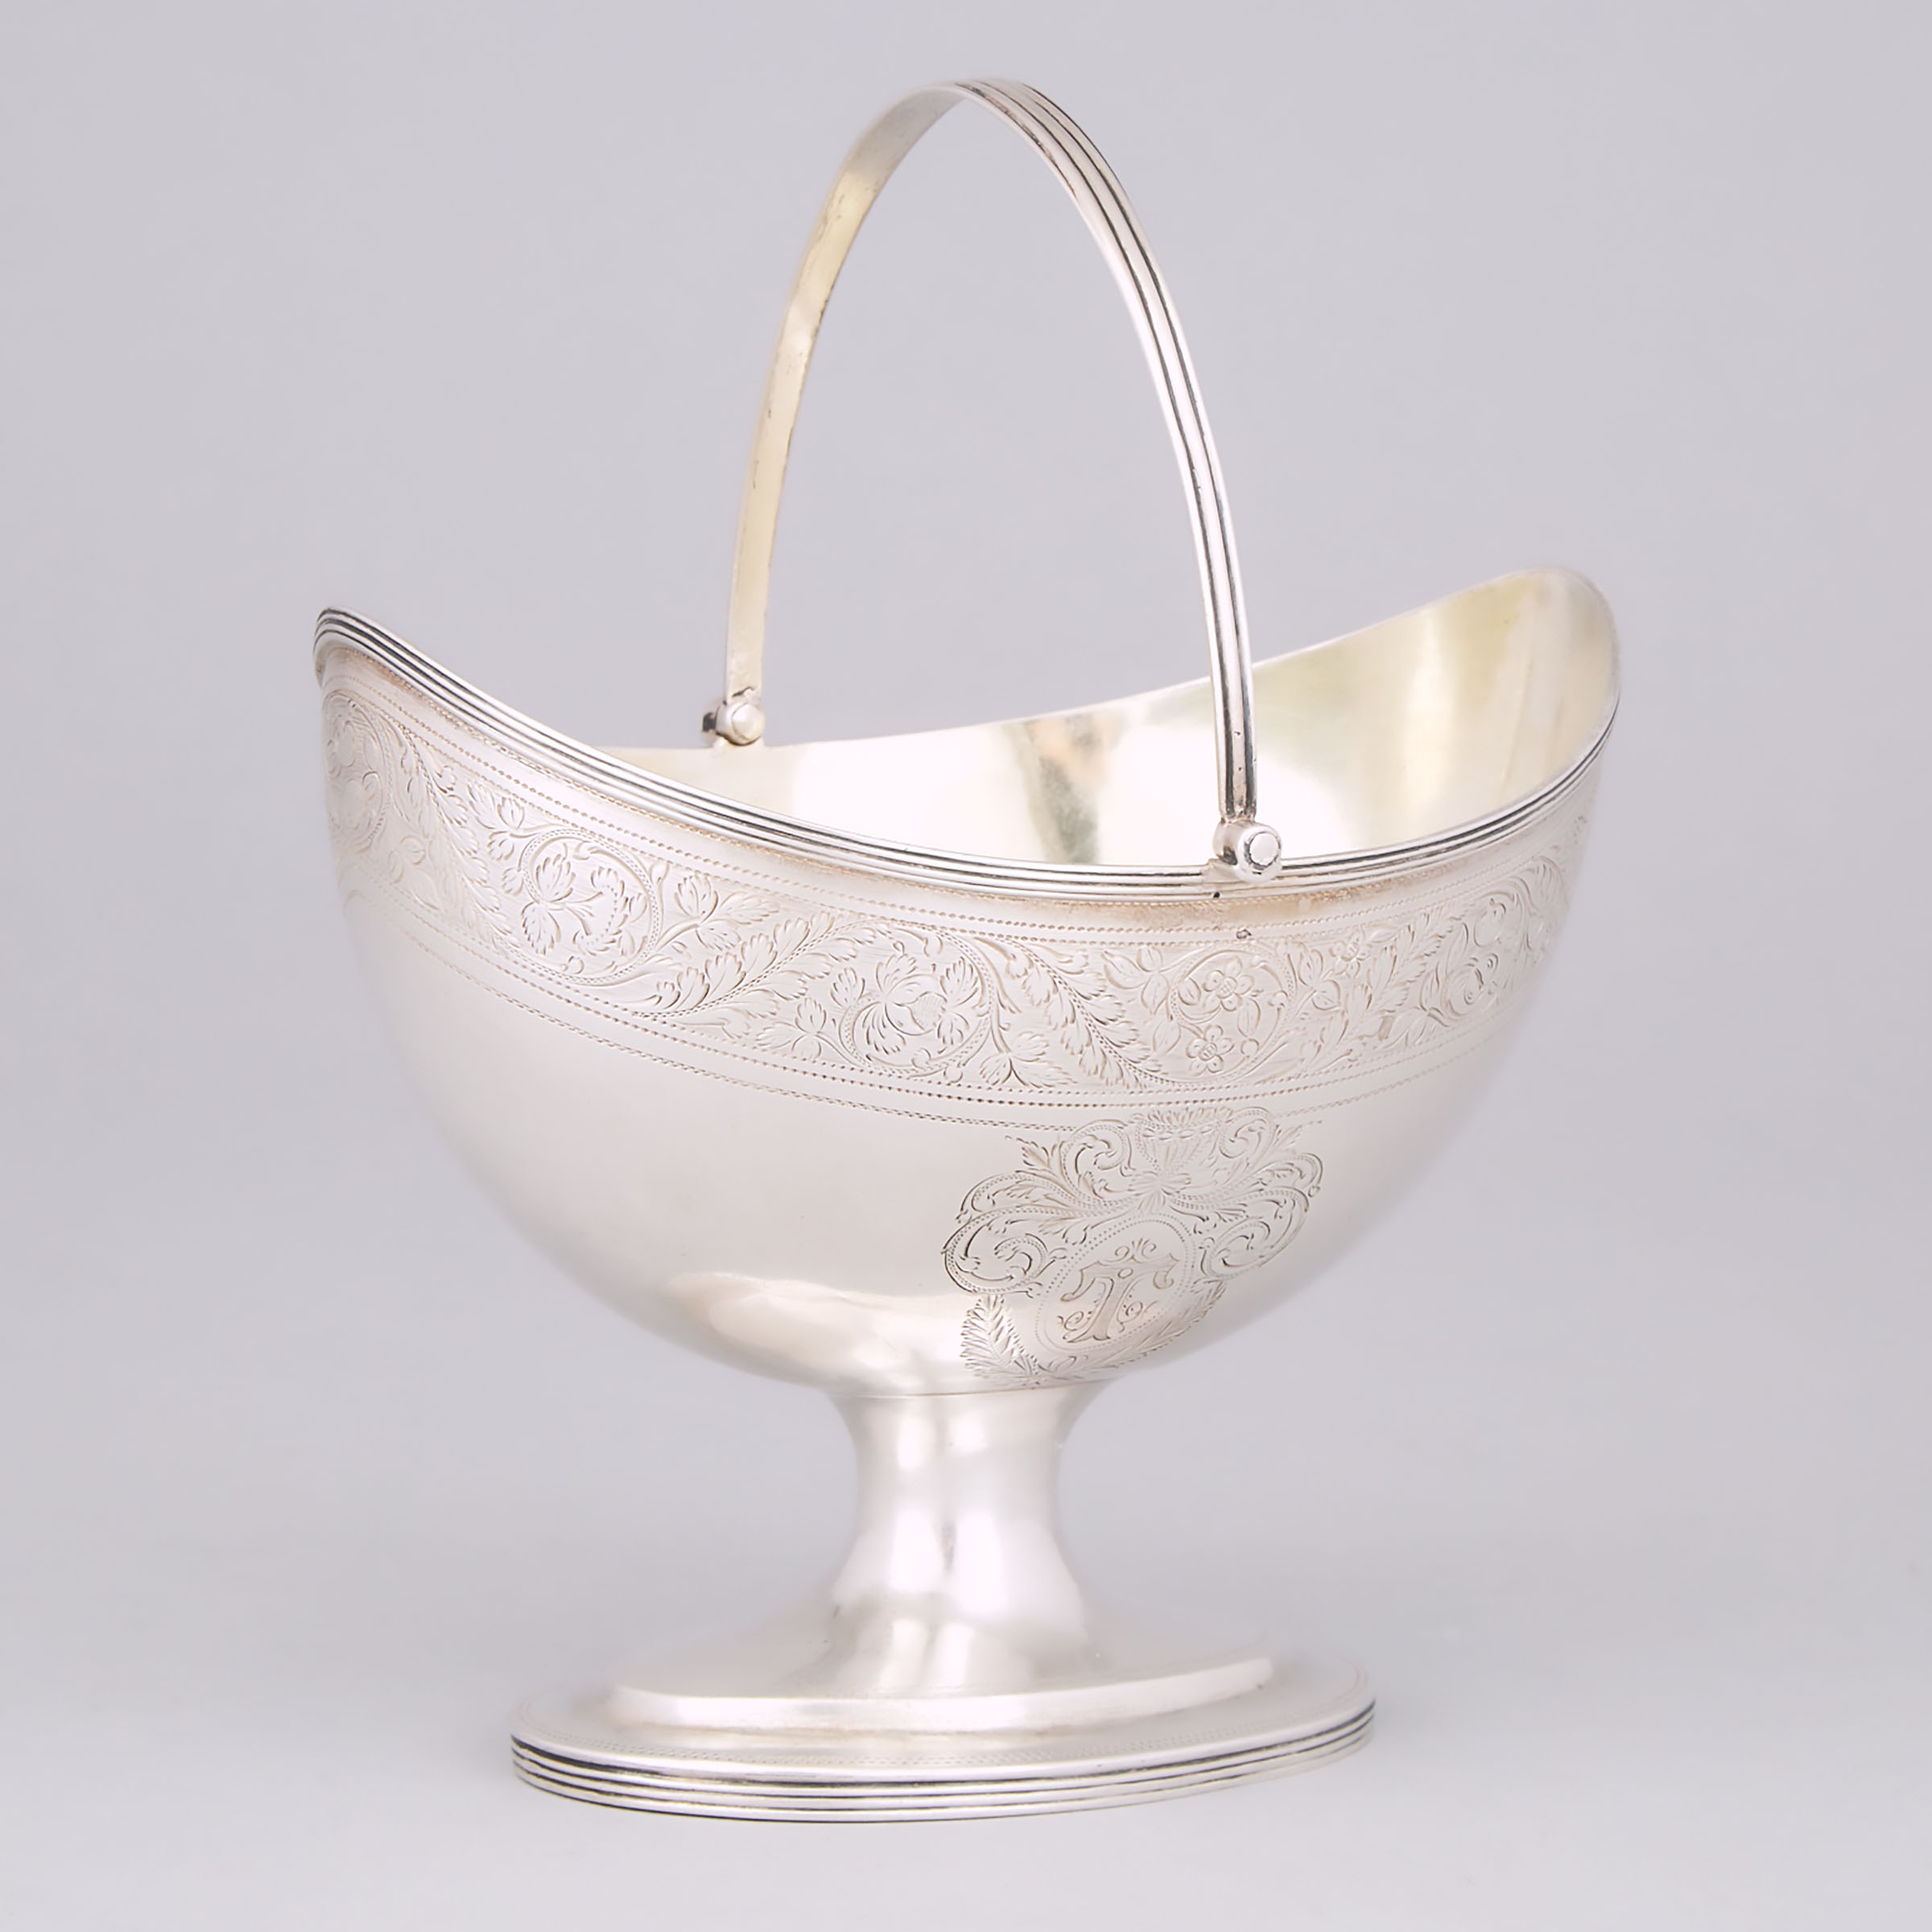 George III Silver Sugar Basket, Alexander Field, London, 1799